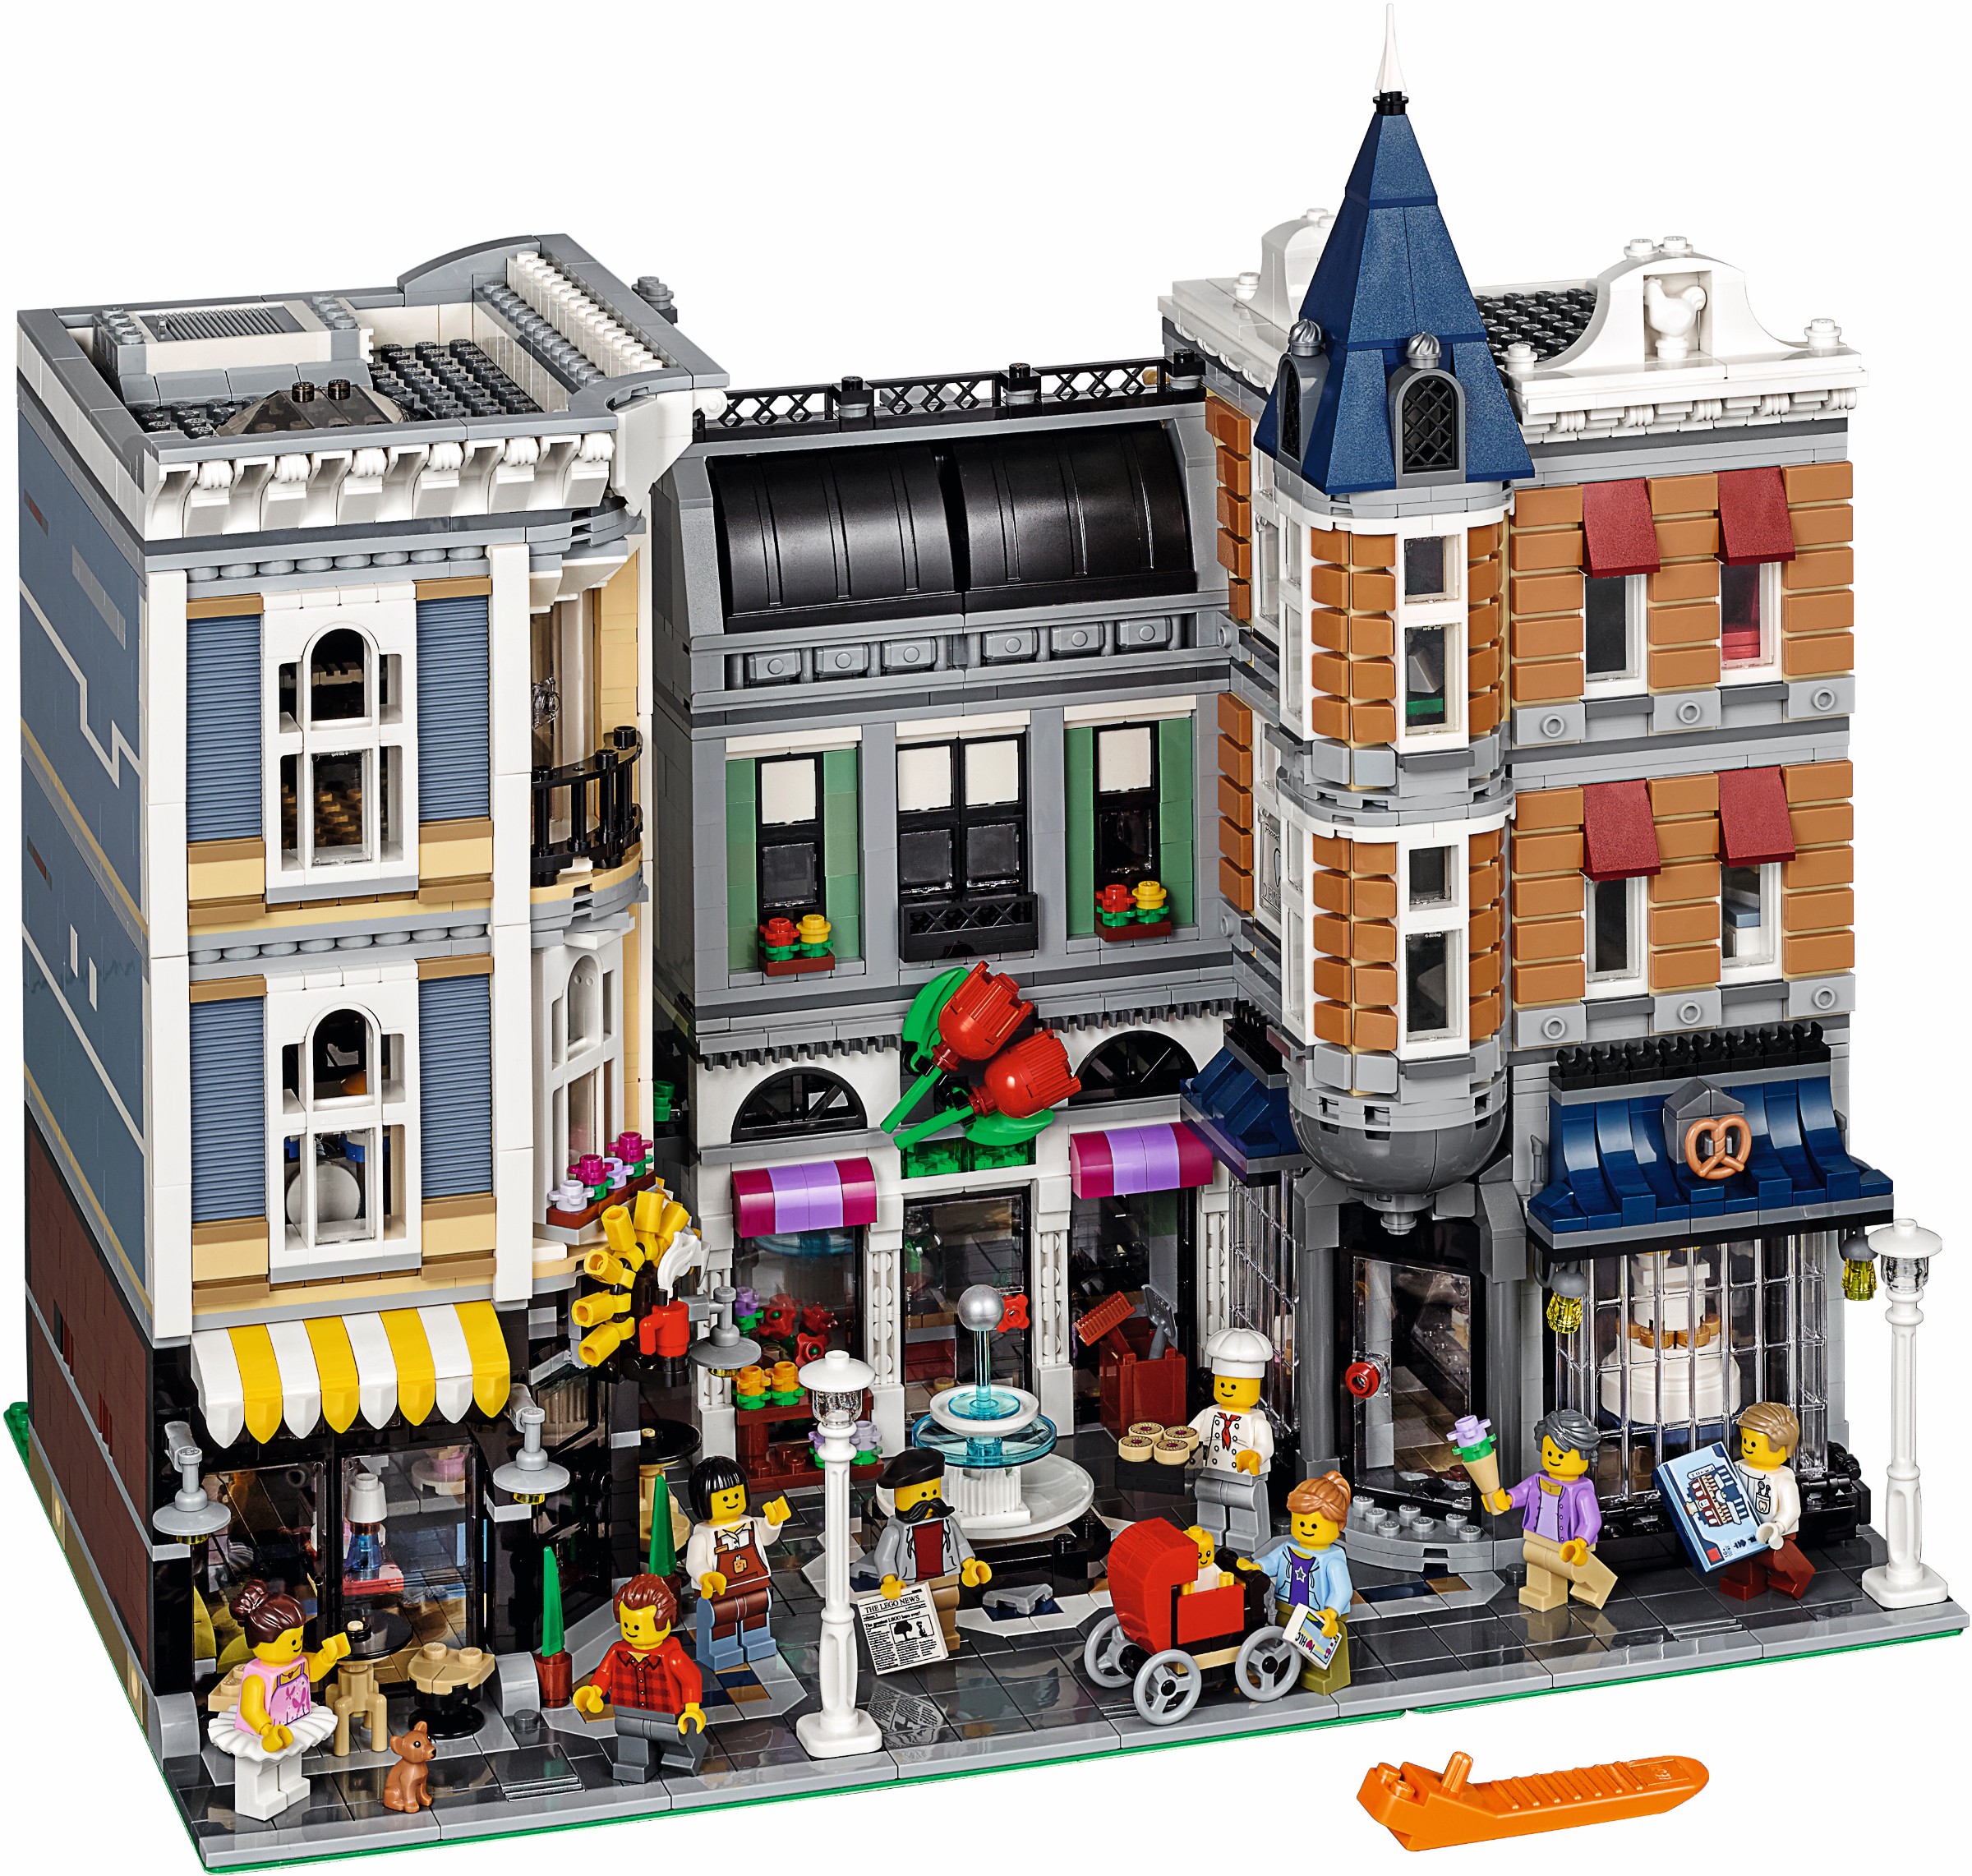 2017 | Brickset: LEGO set guide and 